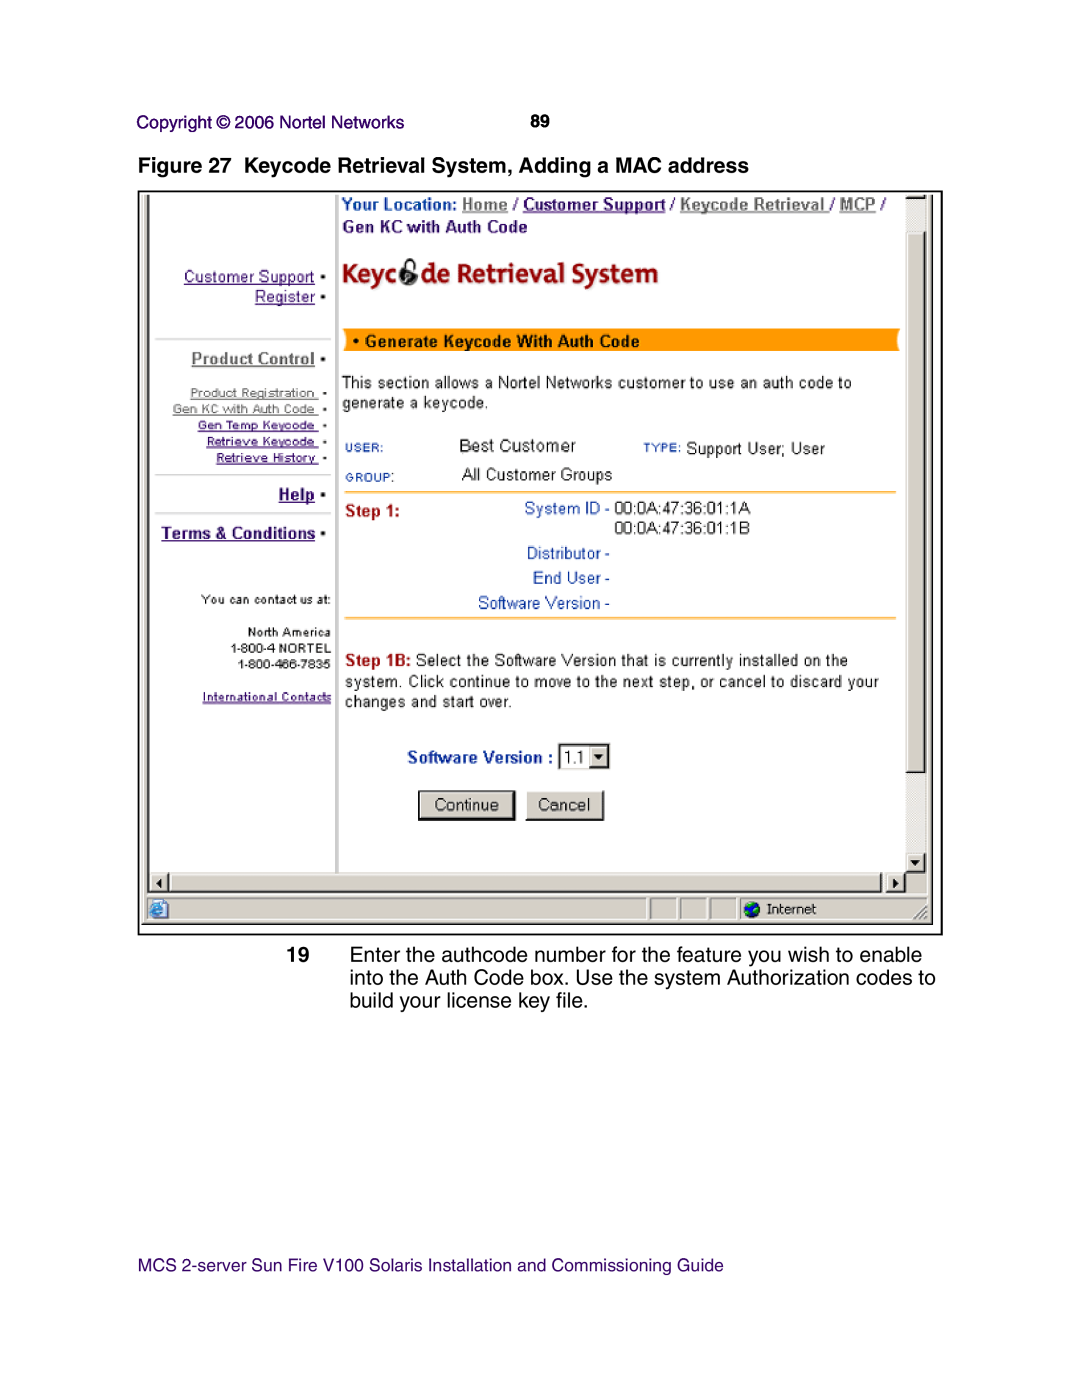 Nortel Networks V100 manual Keycode Retrieval System, Adding a MAC address, Copyright 2006 Nortel Networks 